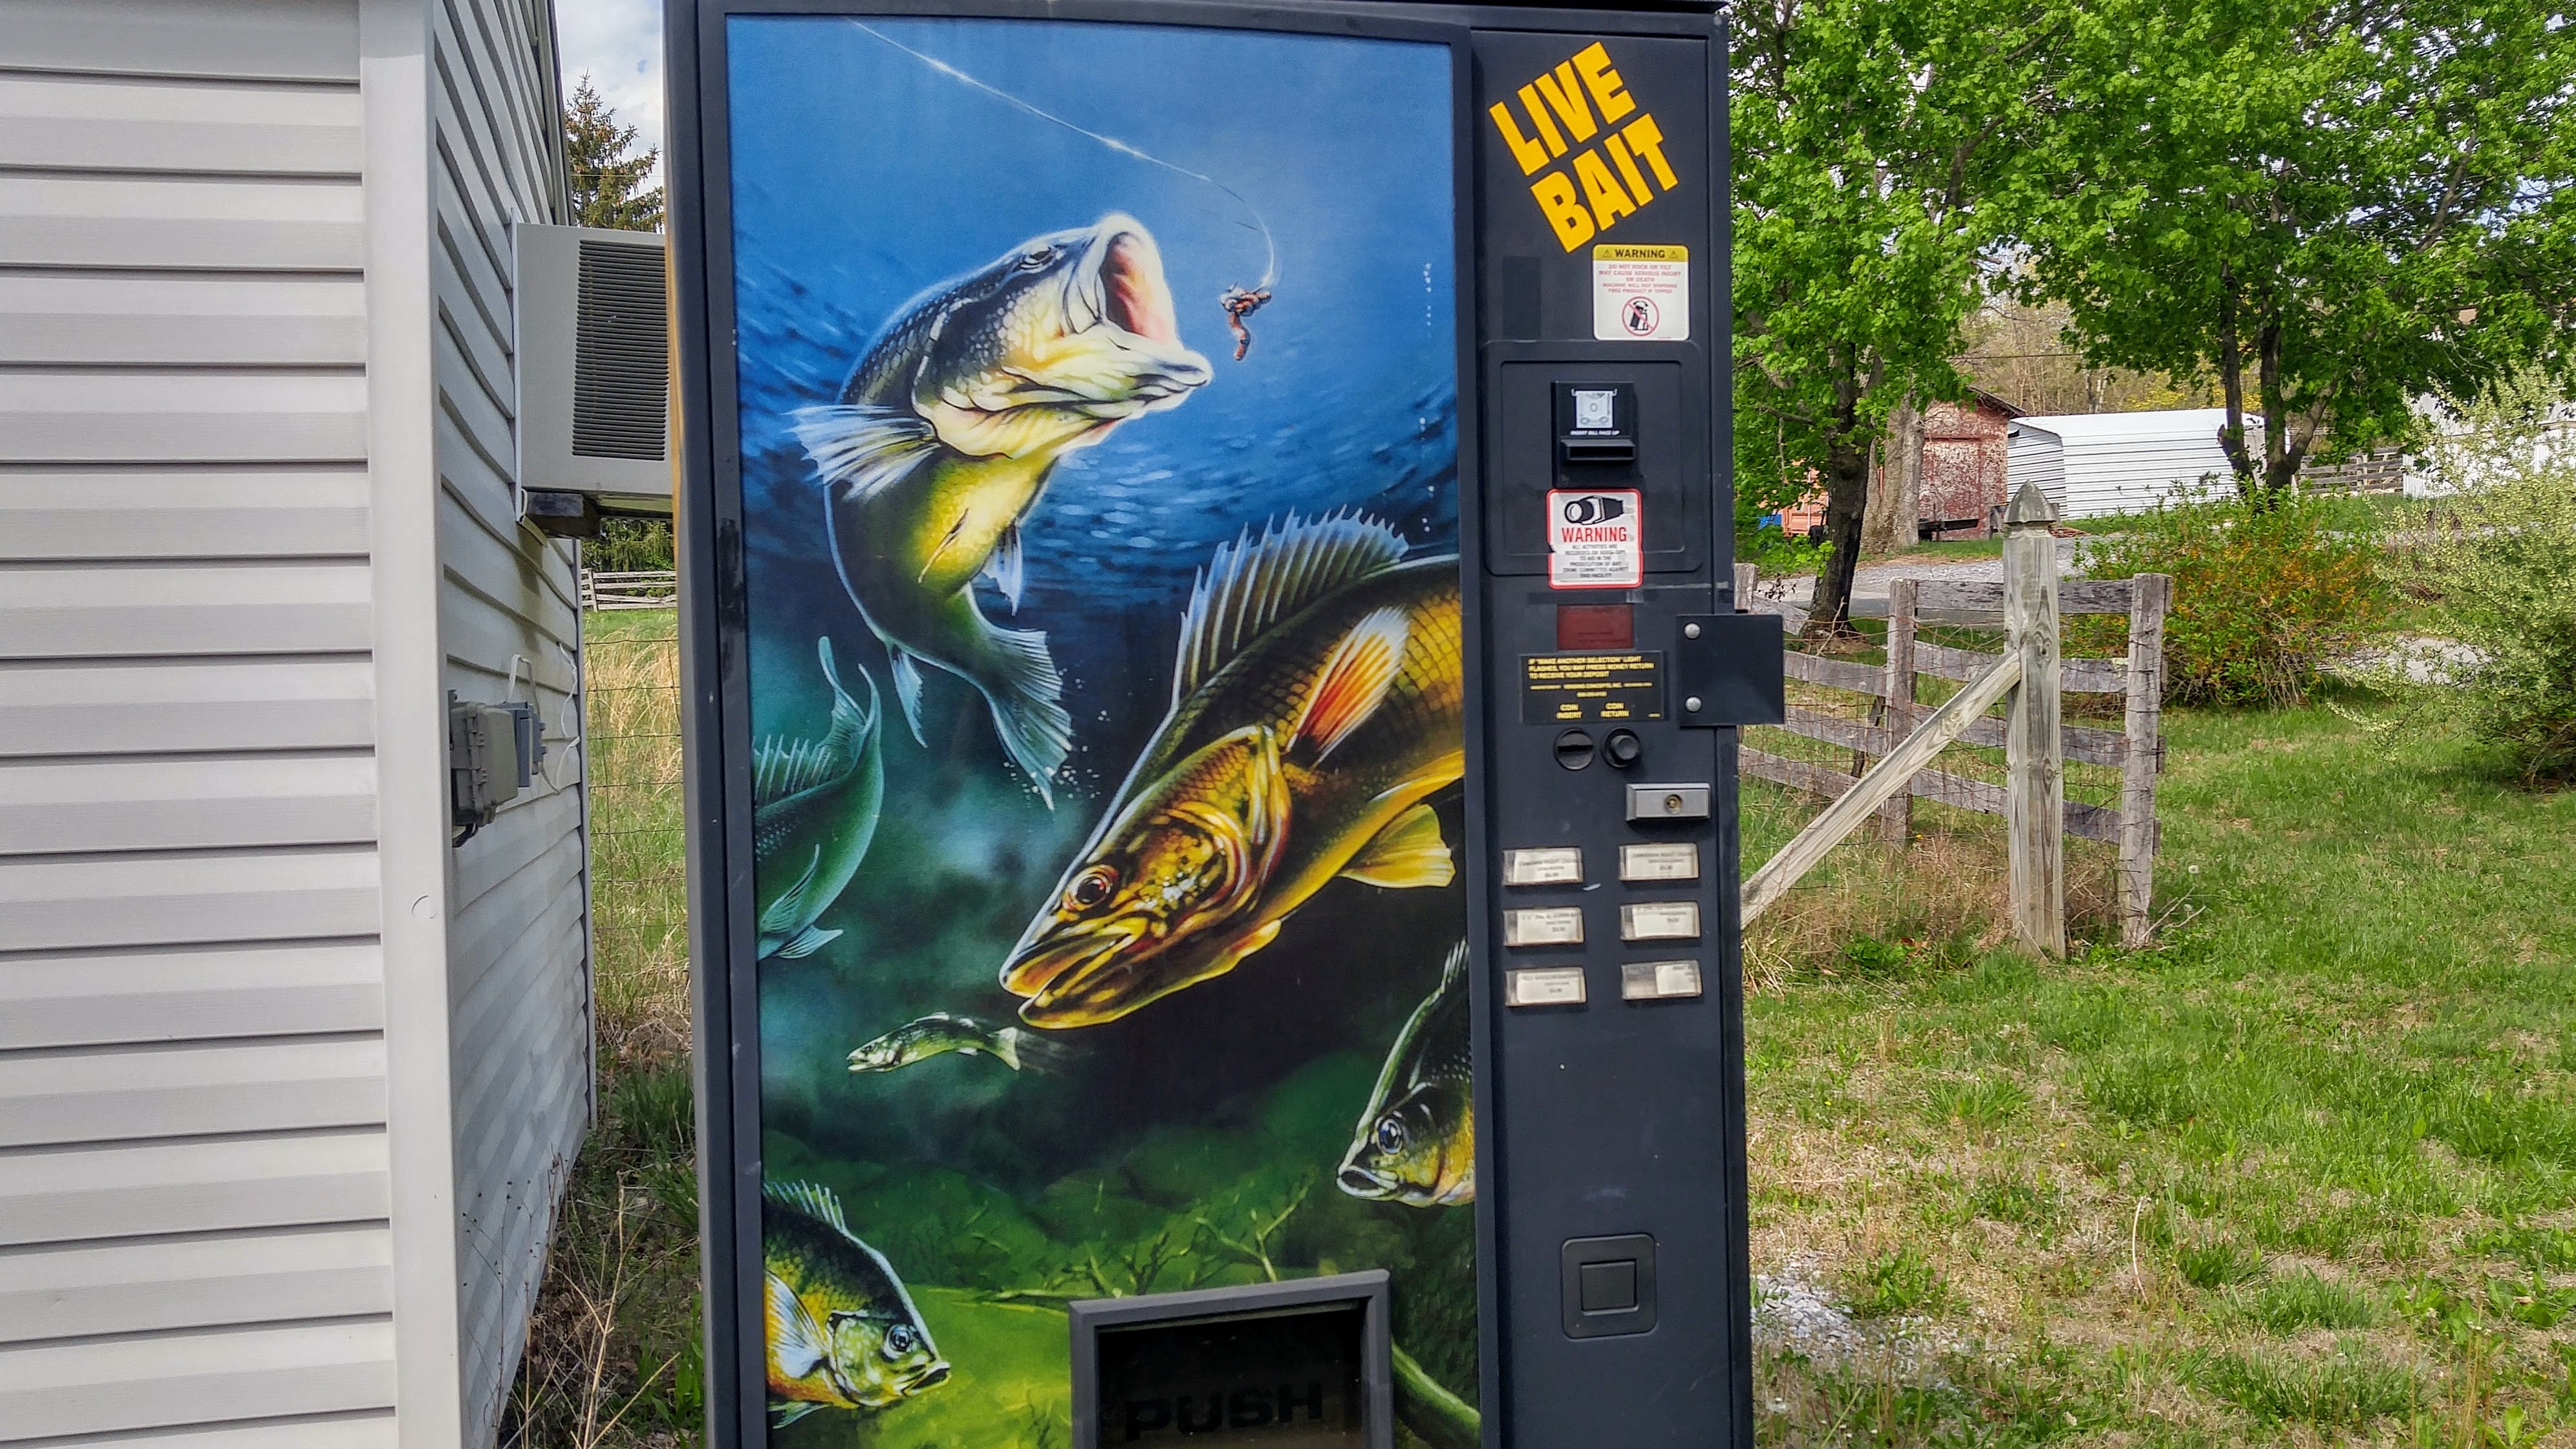 Live Bait vending machine